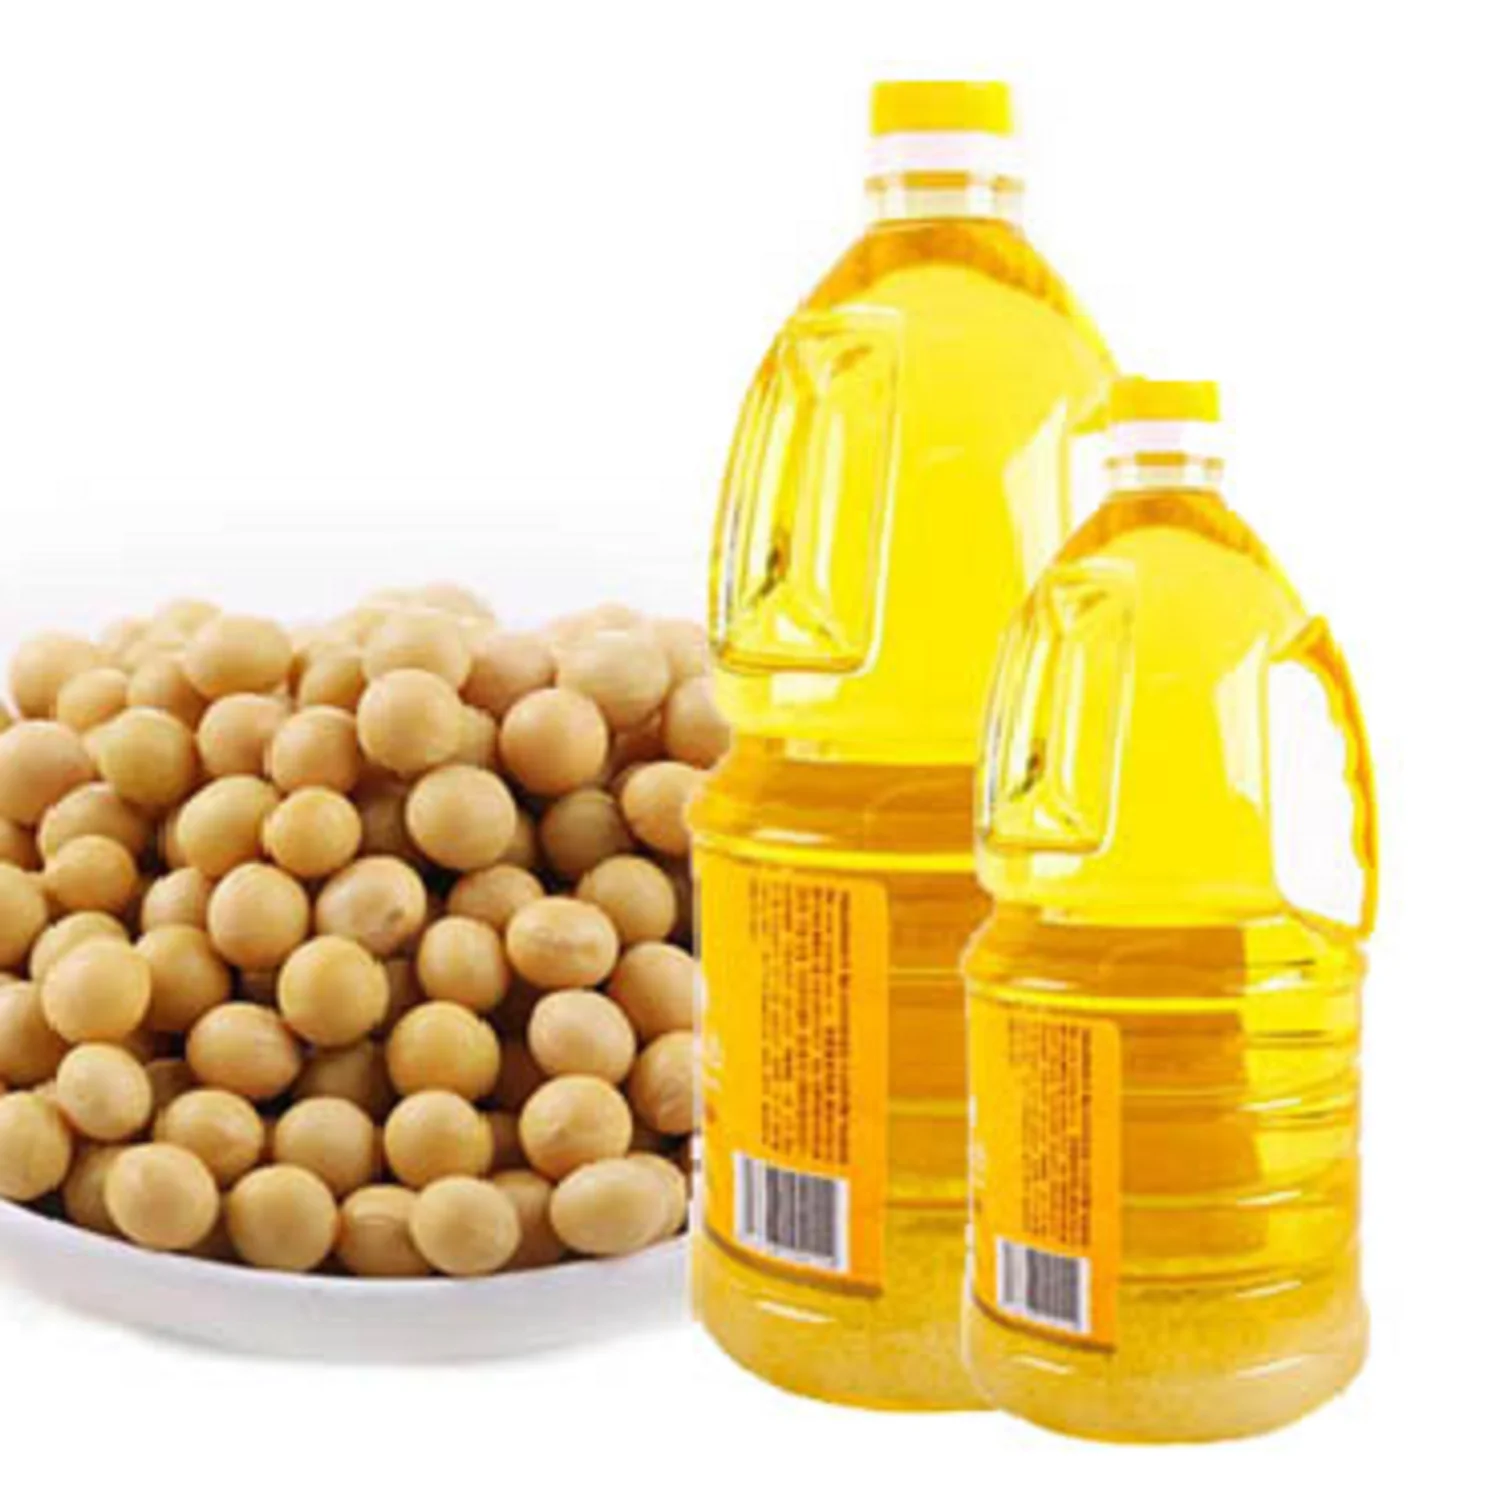 Soya Bean Oil. Pure Refined soybean Oil. Рафинированное соевое масло. Соевое масло производители.